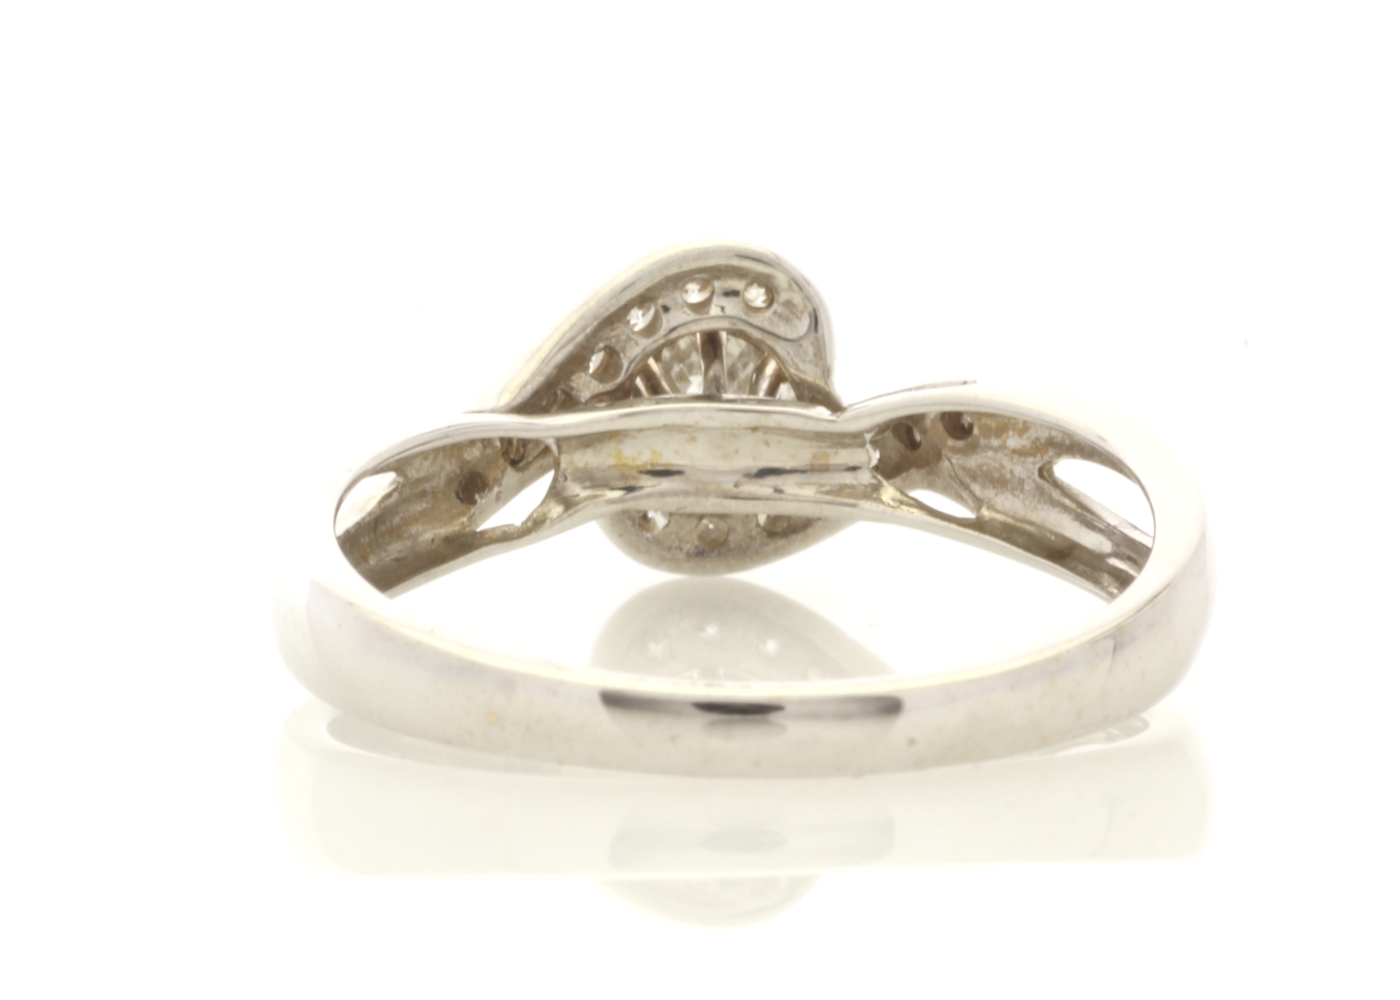 18ct White Gold Single Stone Prong Set With Stone Set Shoulders Diamond Ring 0.61 Carats - Image 3 of 5